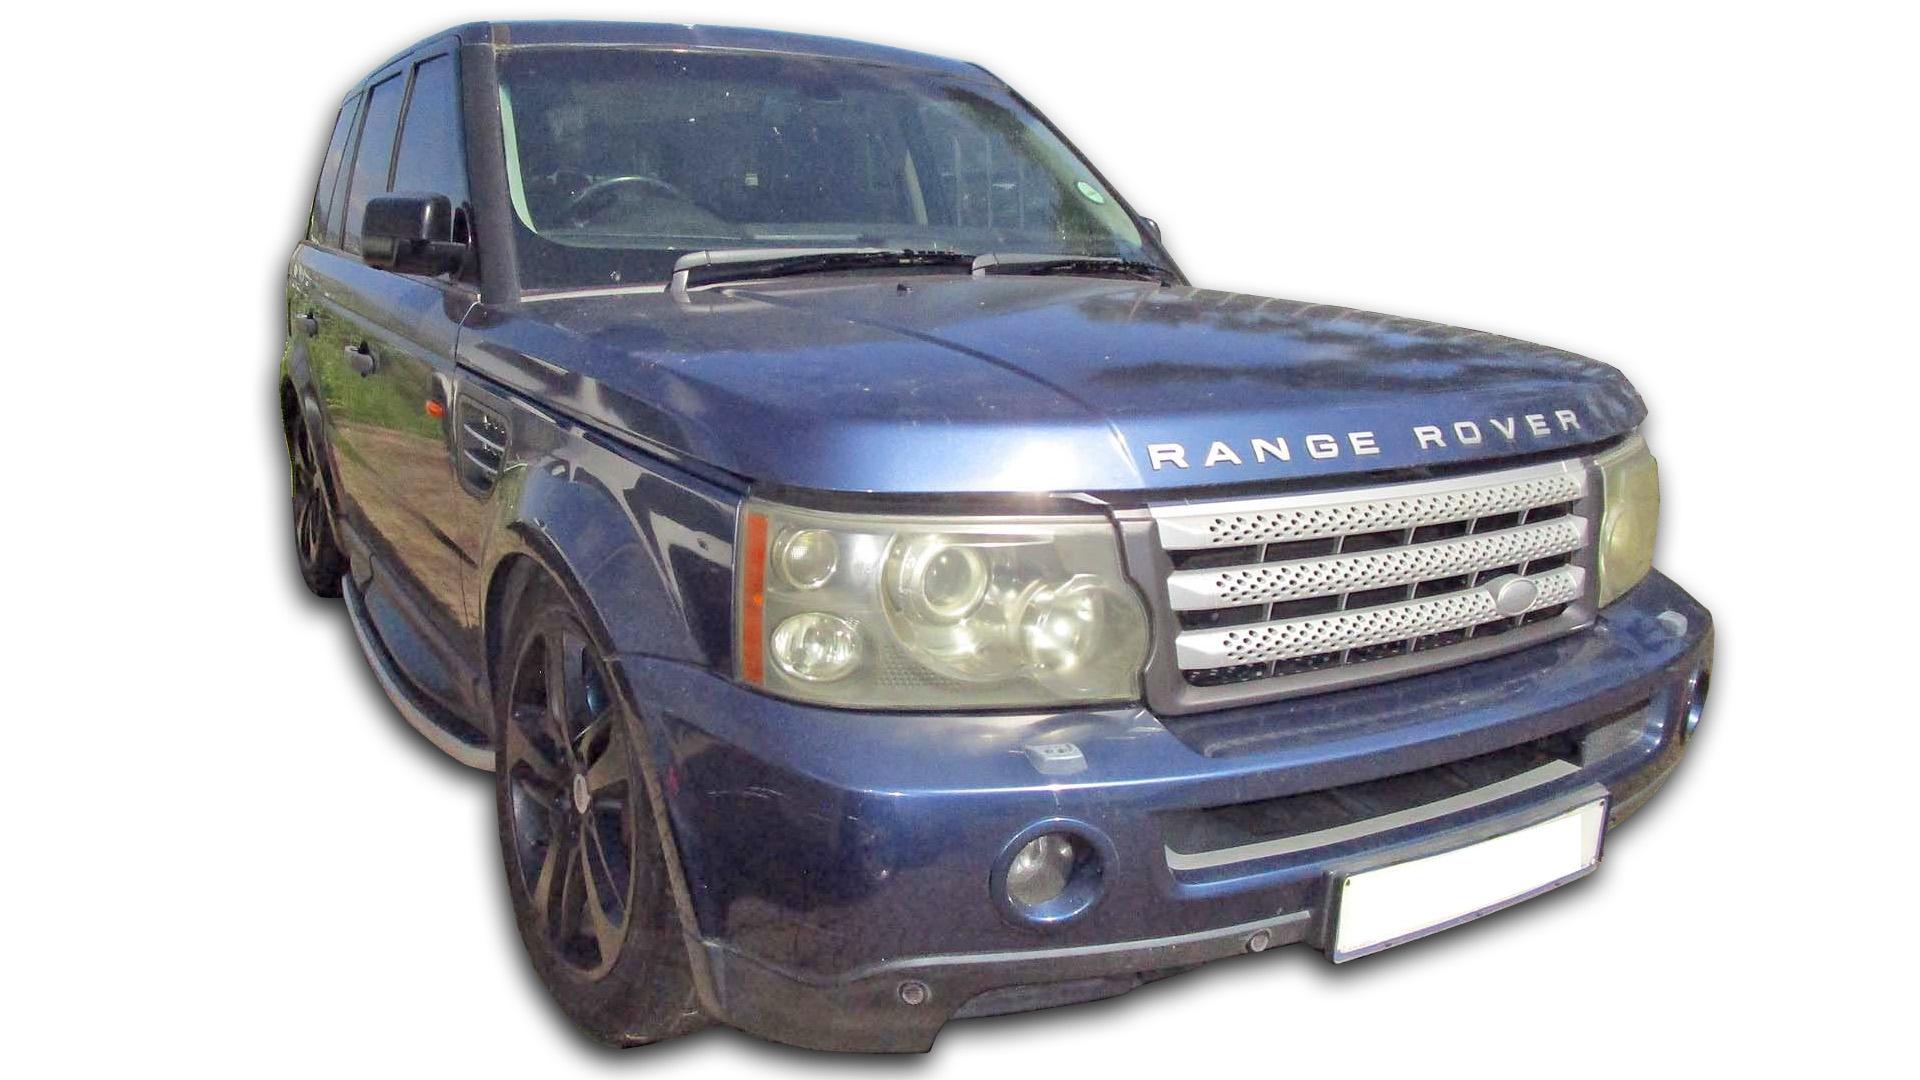 Range Rover Land Rover Range Hse